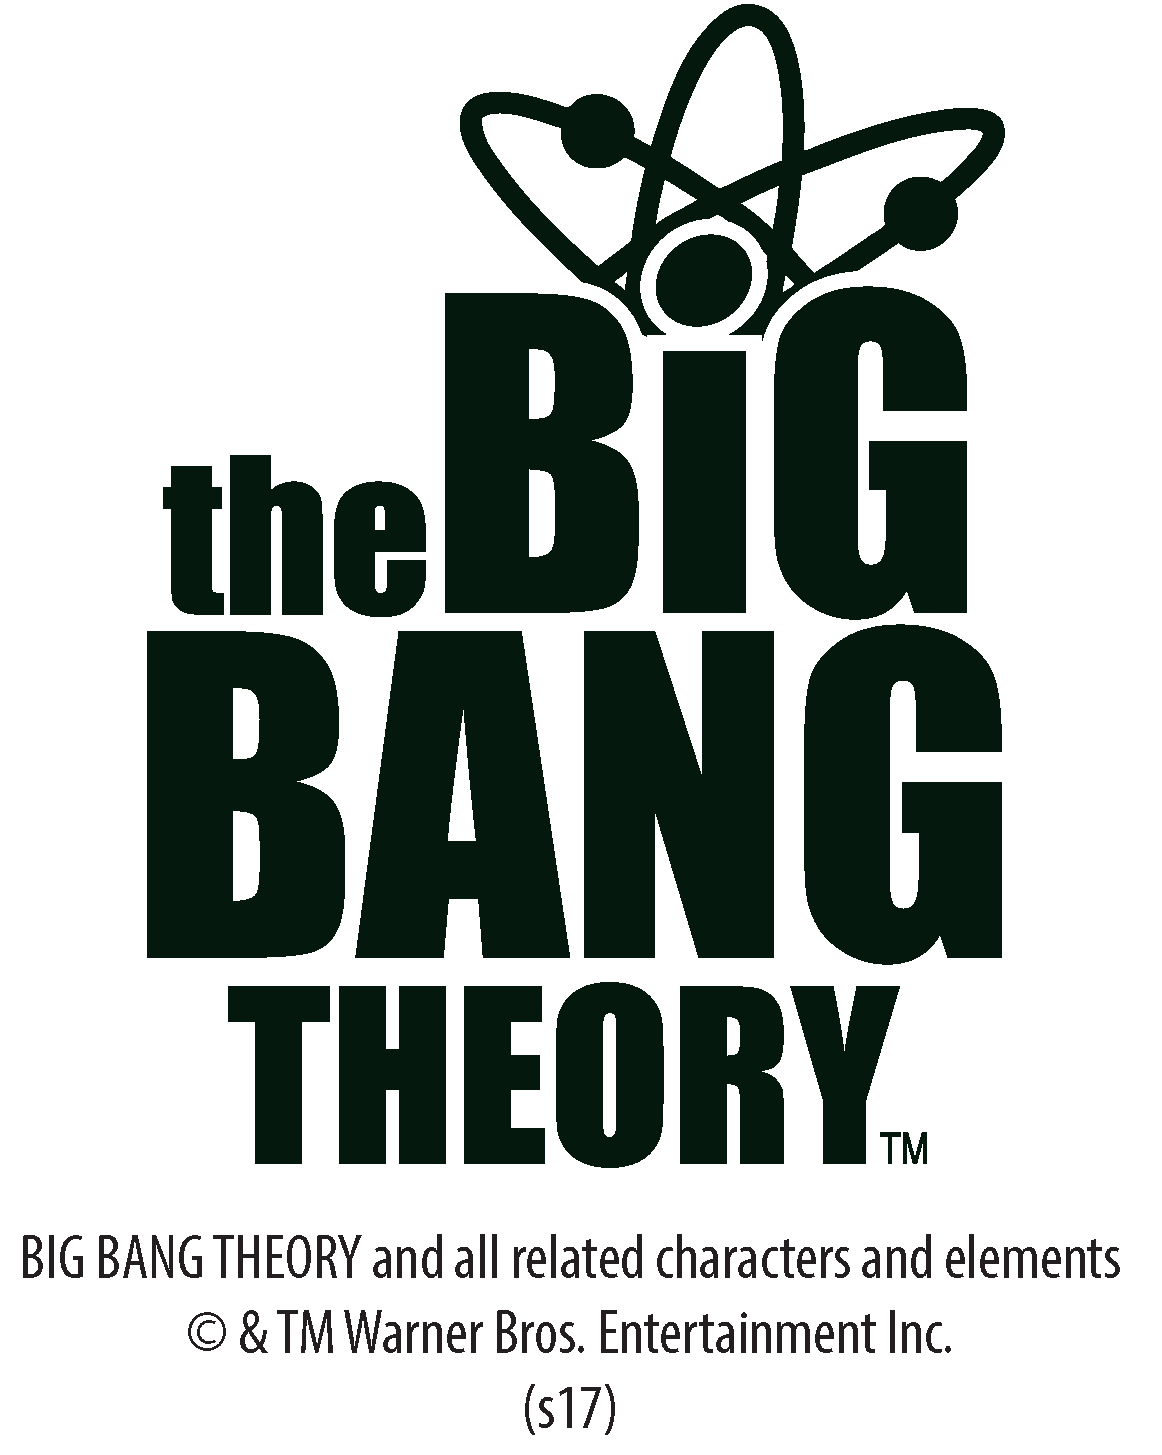 Big Bang Theory +Logo Rock Lizard Spock Official Sweatshirt